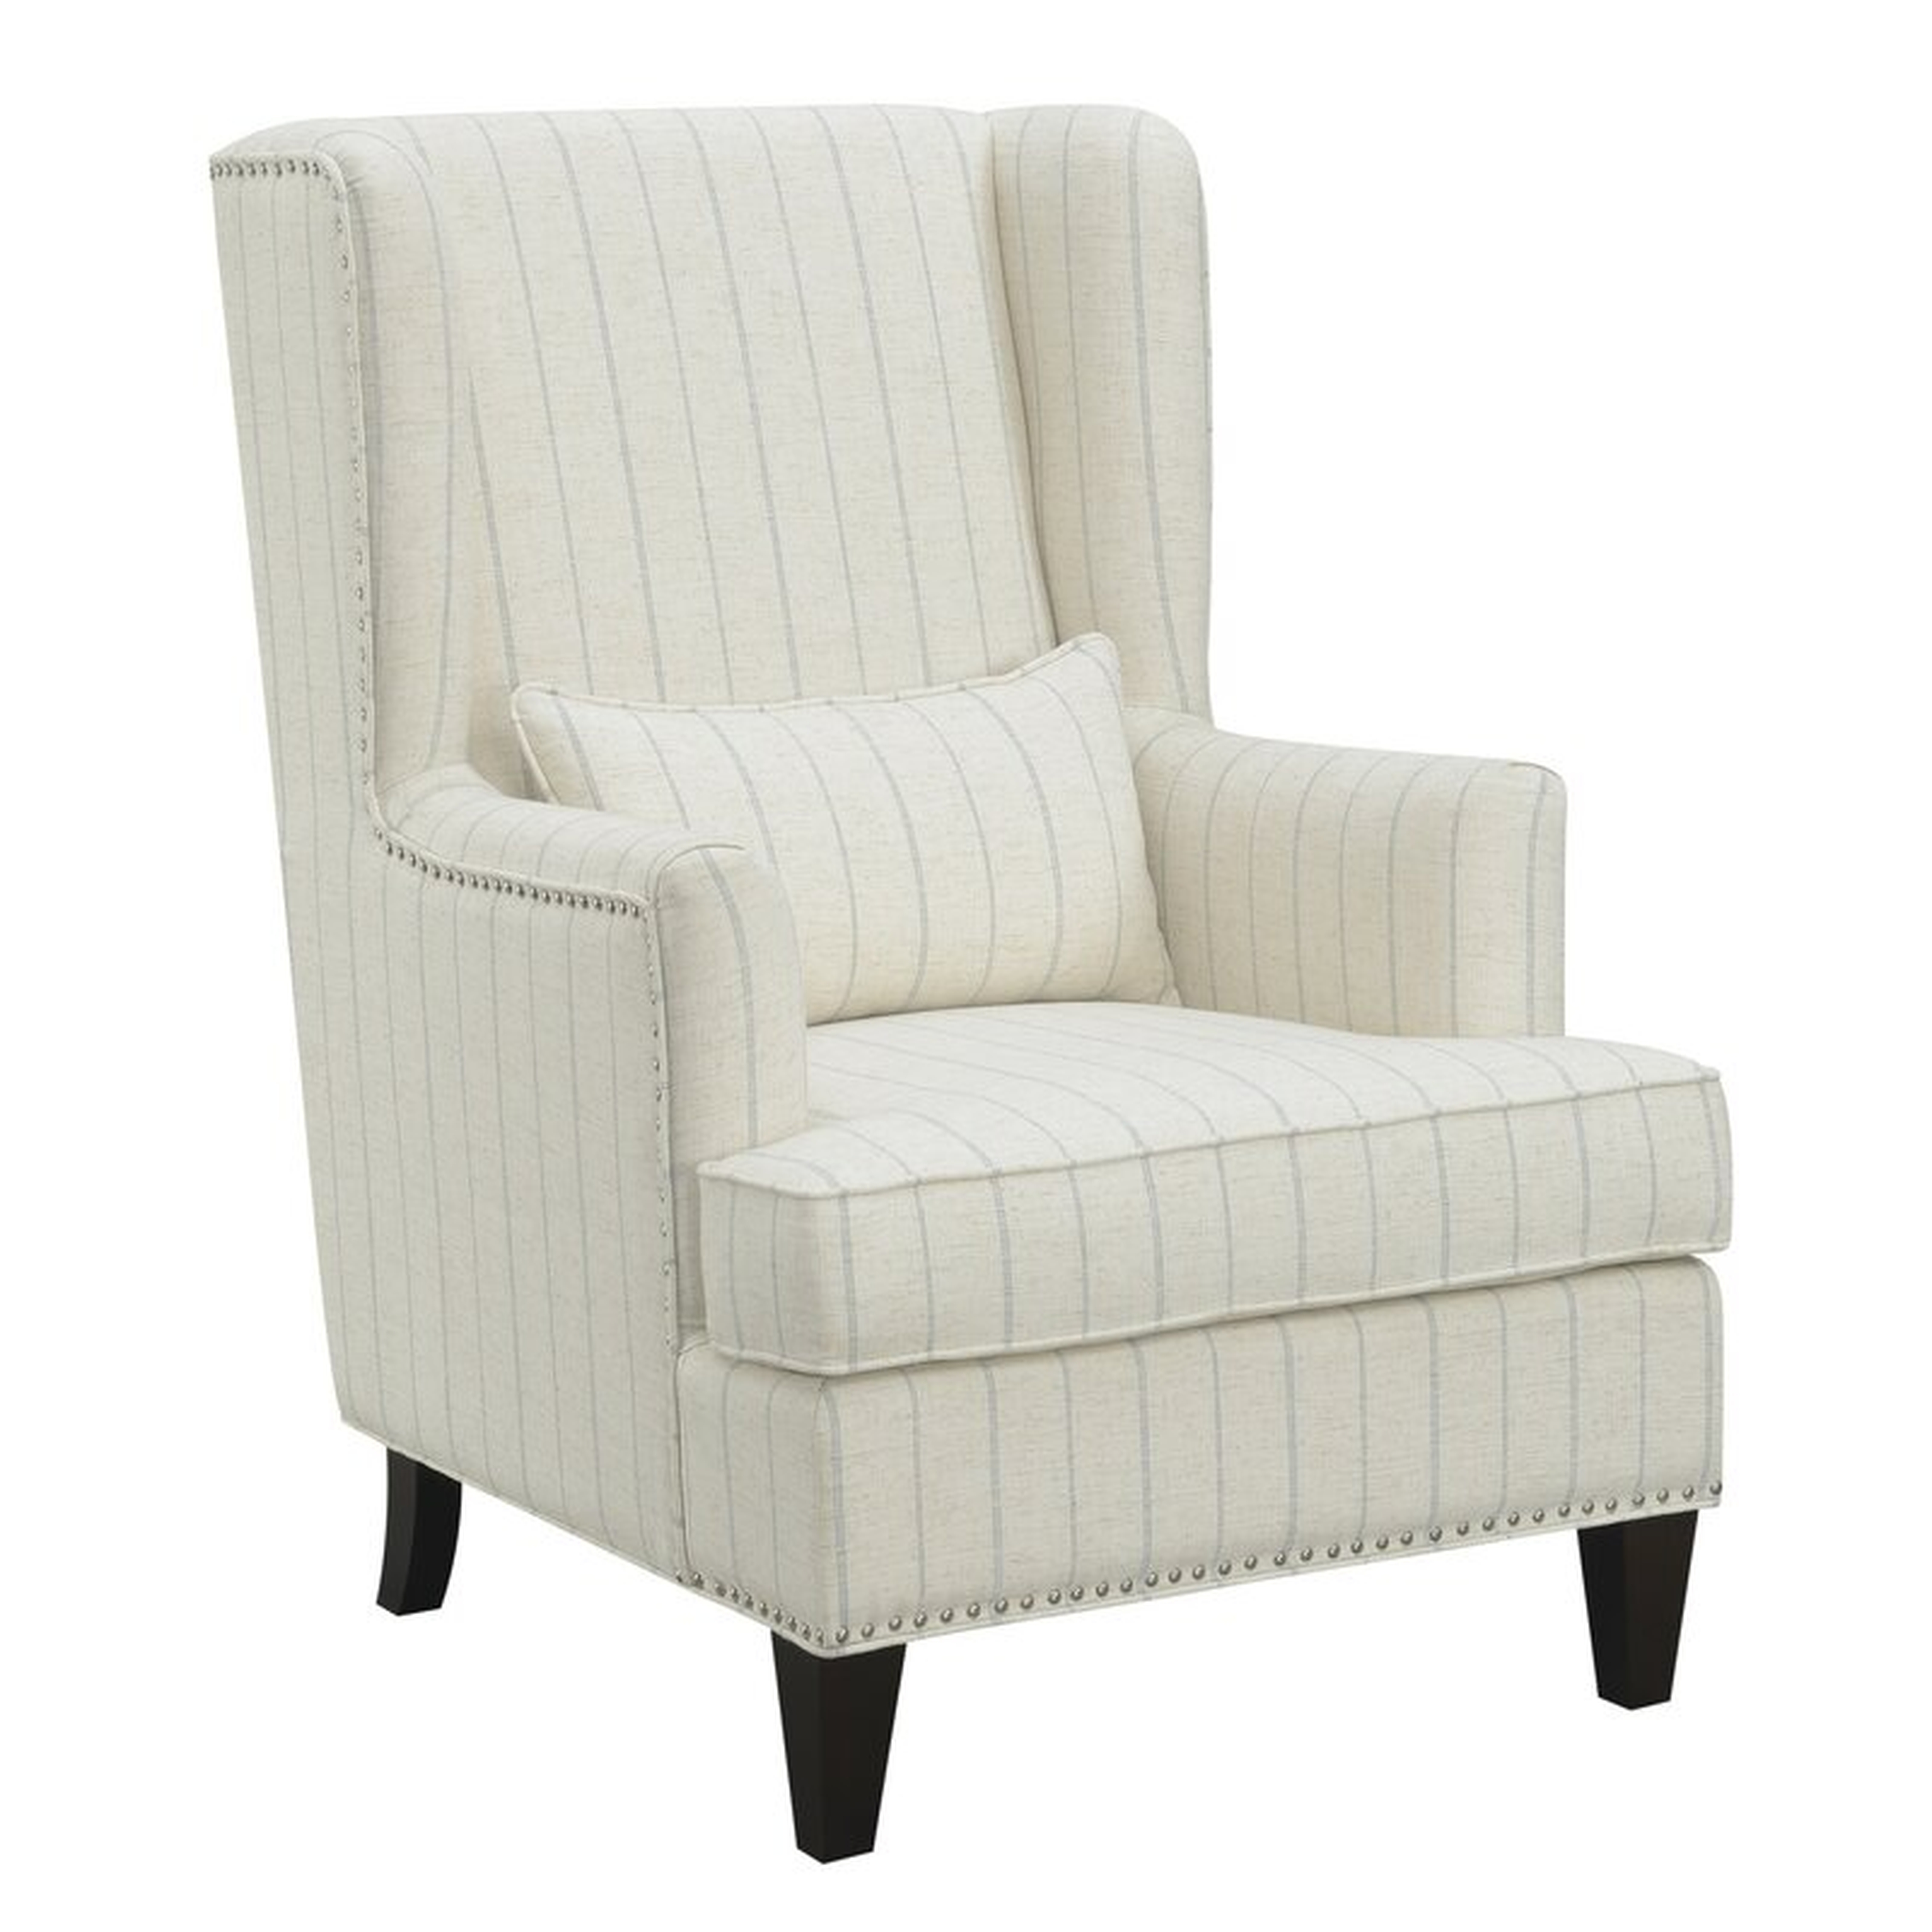 Mcdonald 34" Wide Polyester Wingback Chair - Wayfair